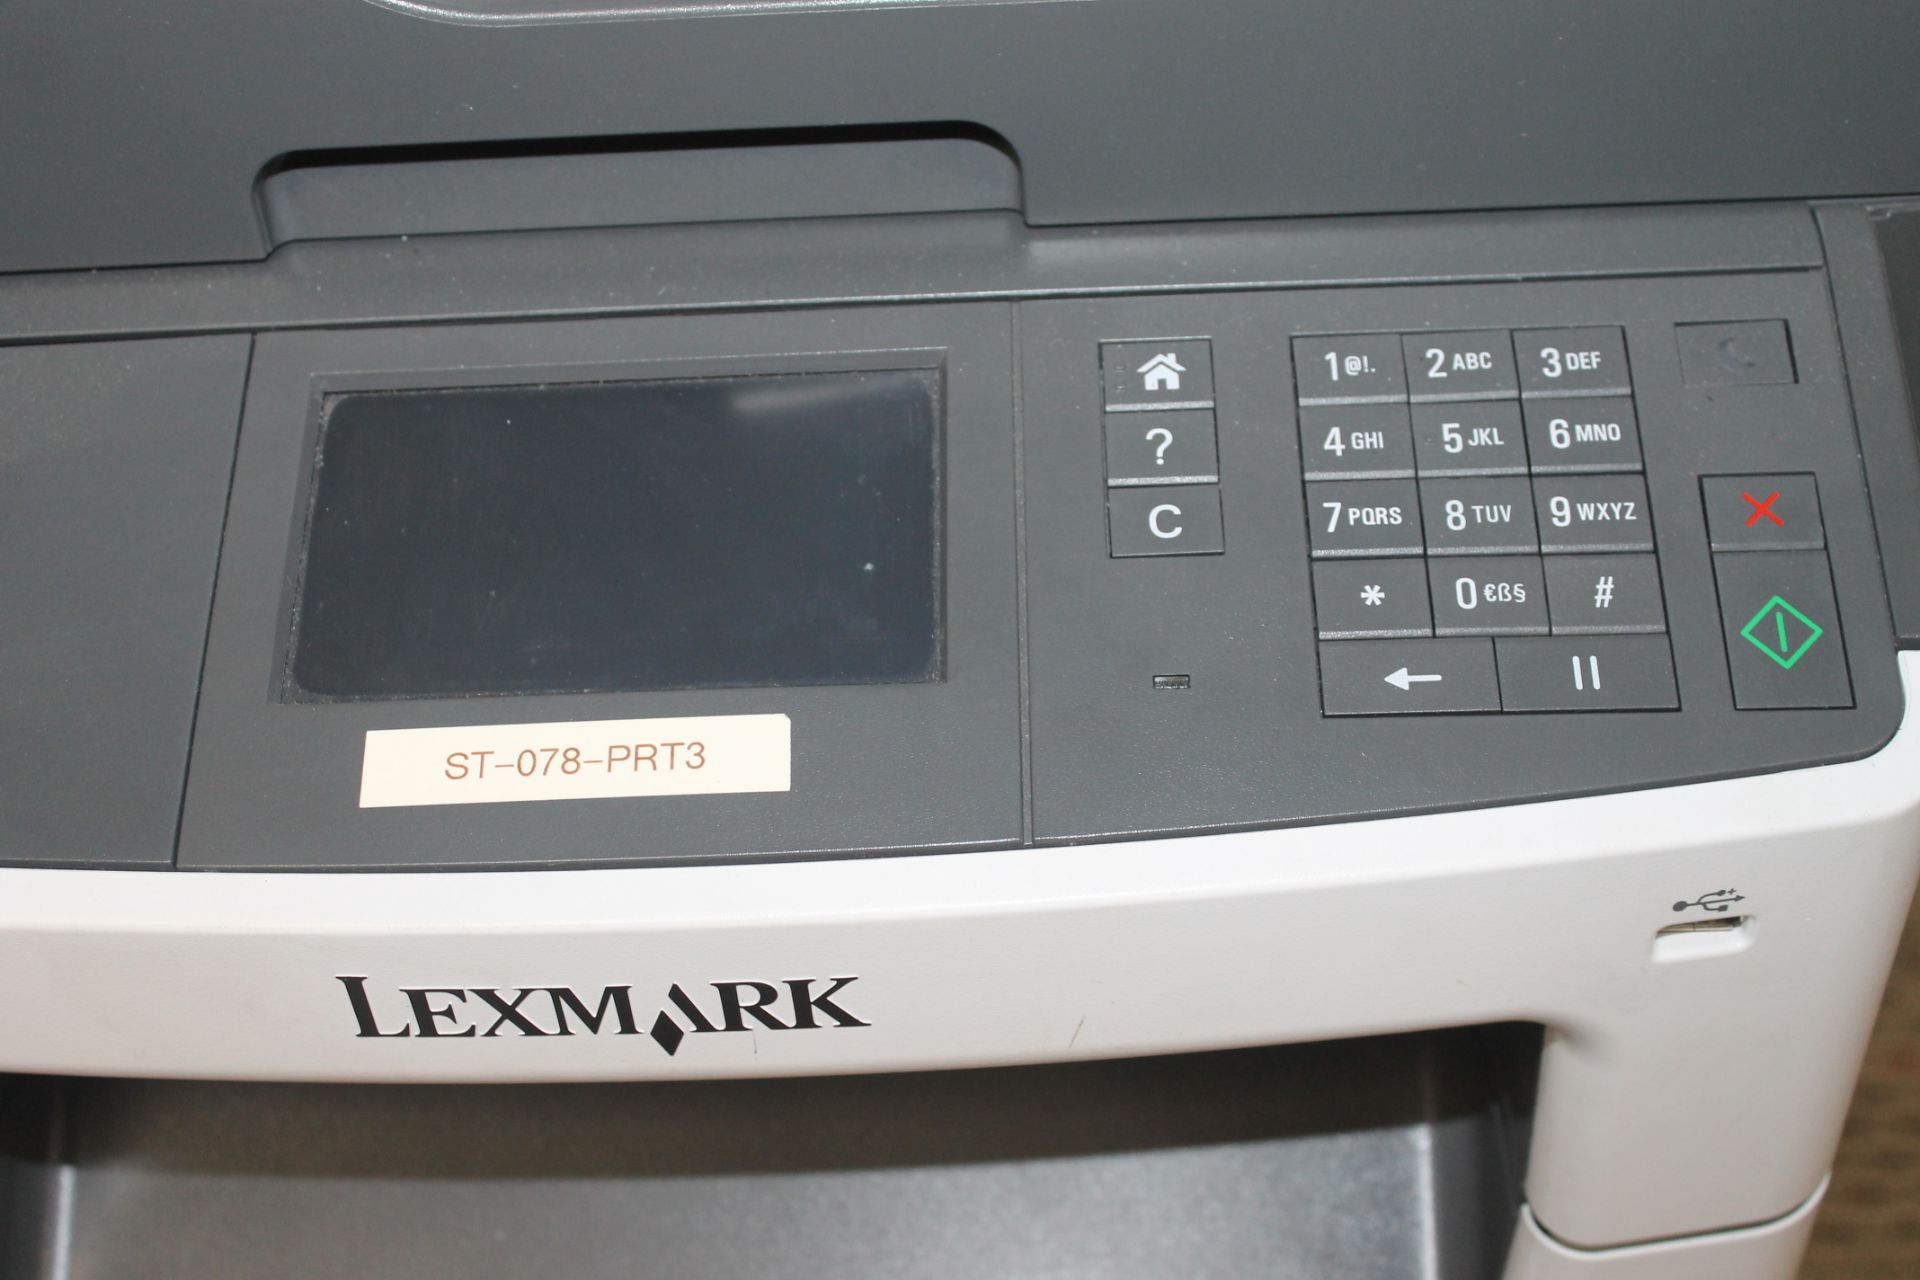 LEXMARK MX510DE ALL-IN-ONE LASER PRINTER - Image 2 of 3